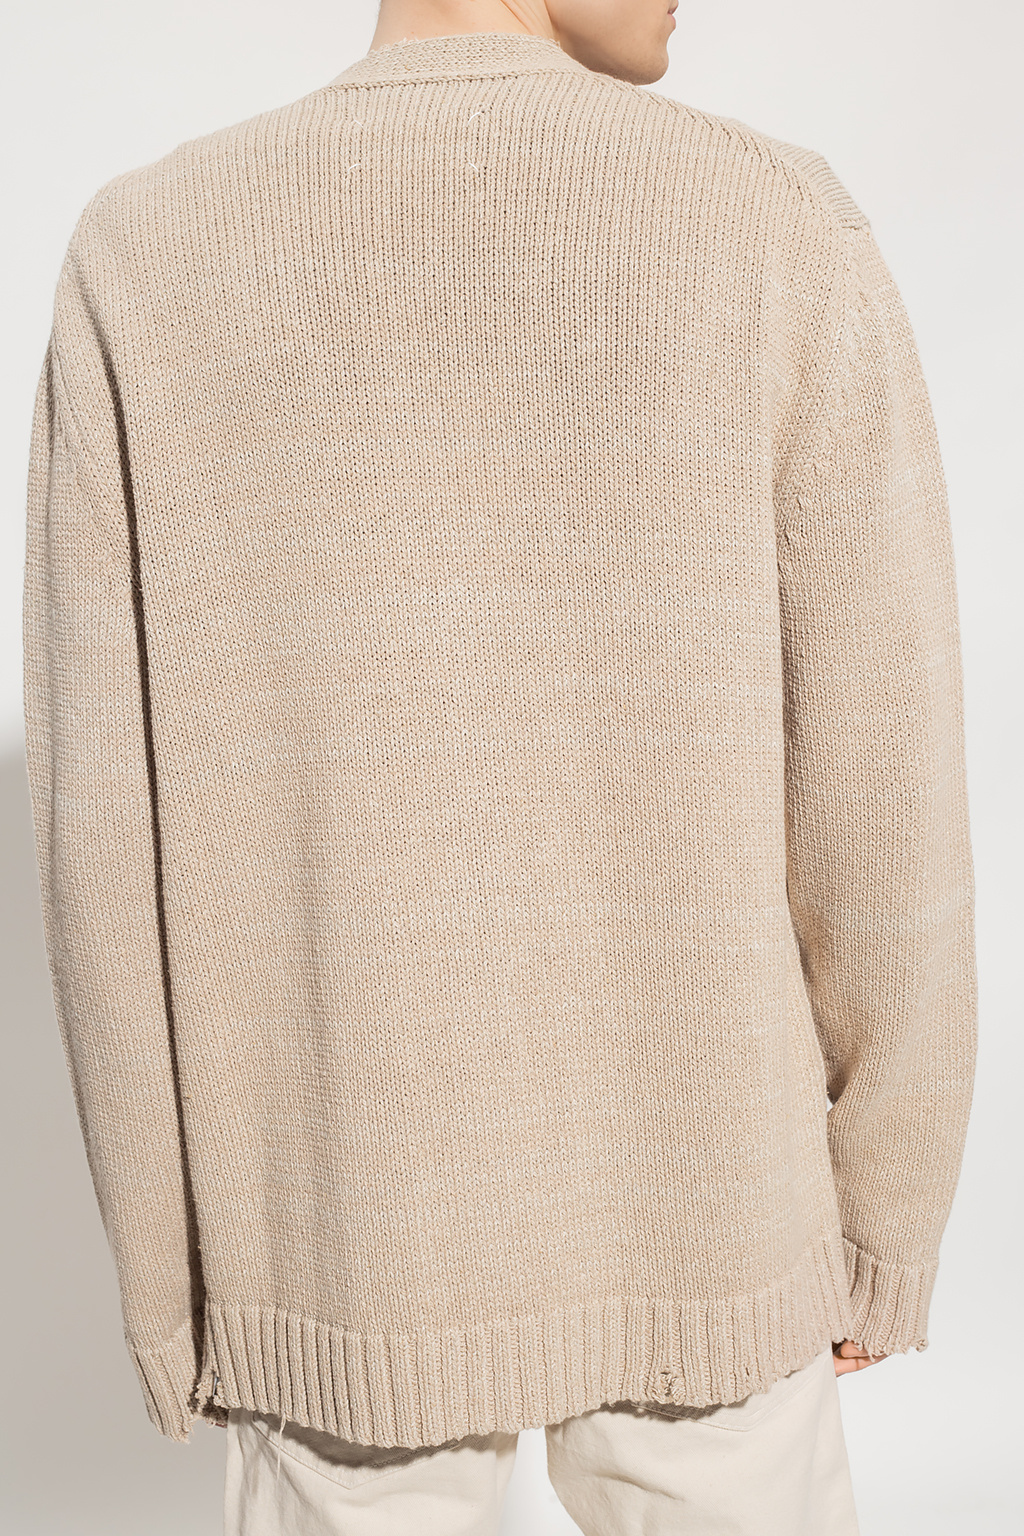 Maison Margiela Calvin Klein 205W39nyc relaxed shape sweatshirt